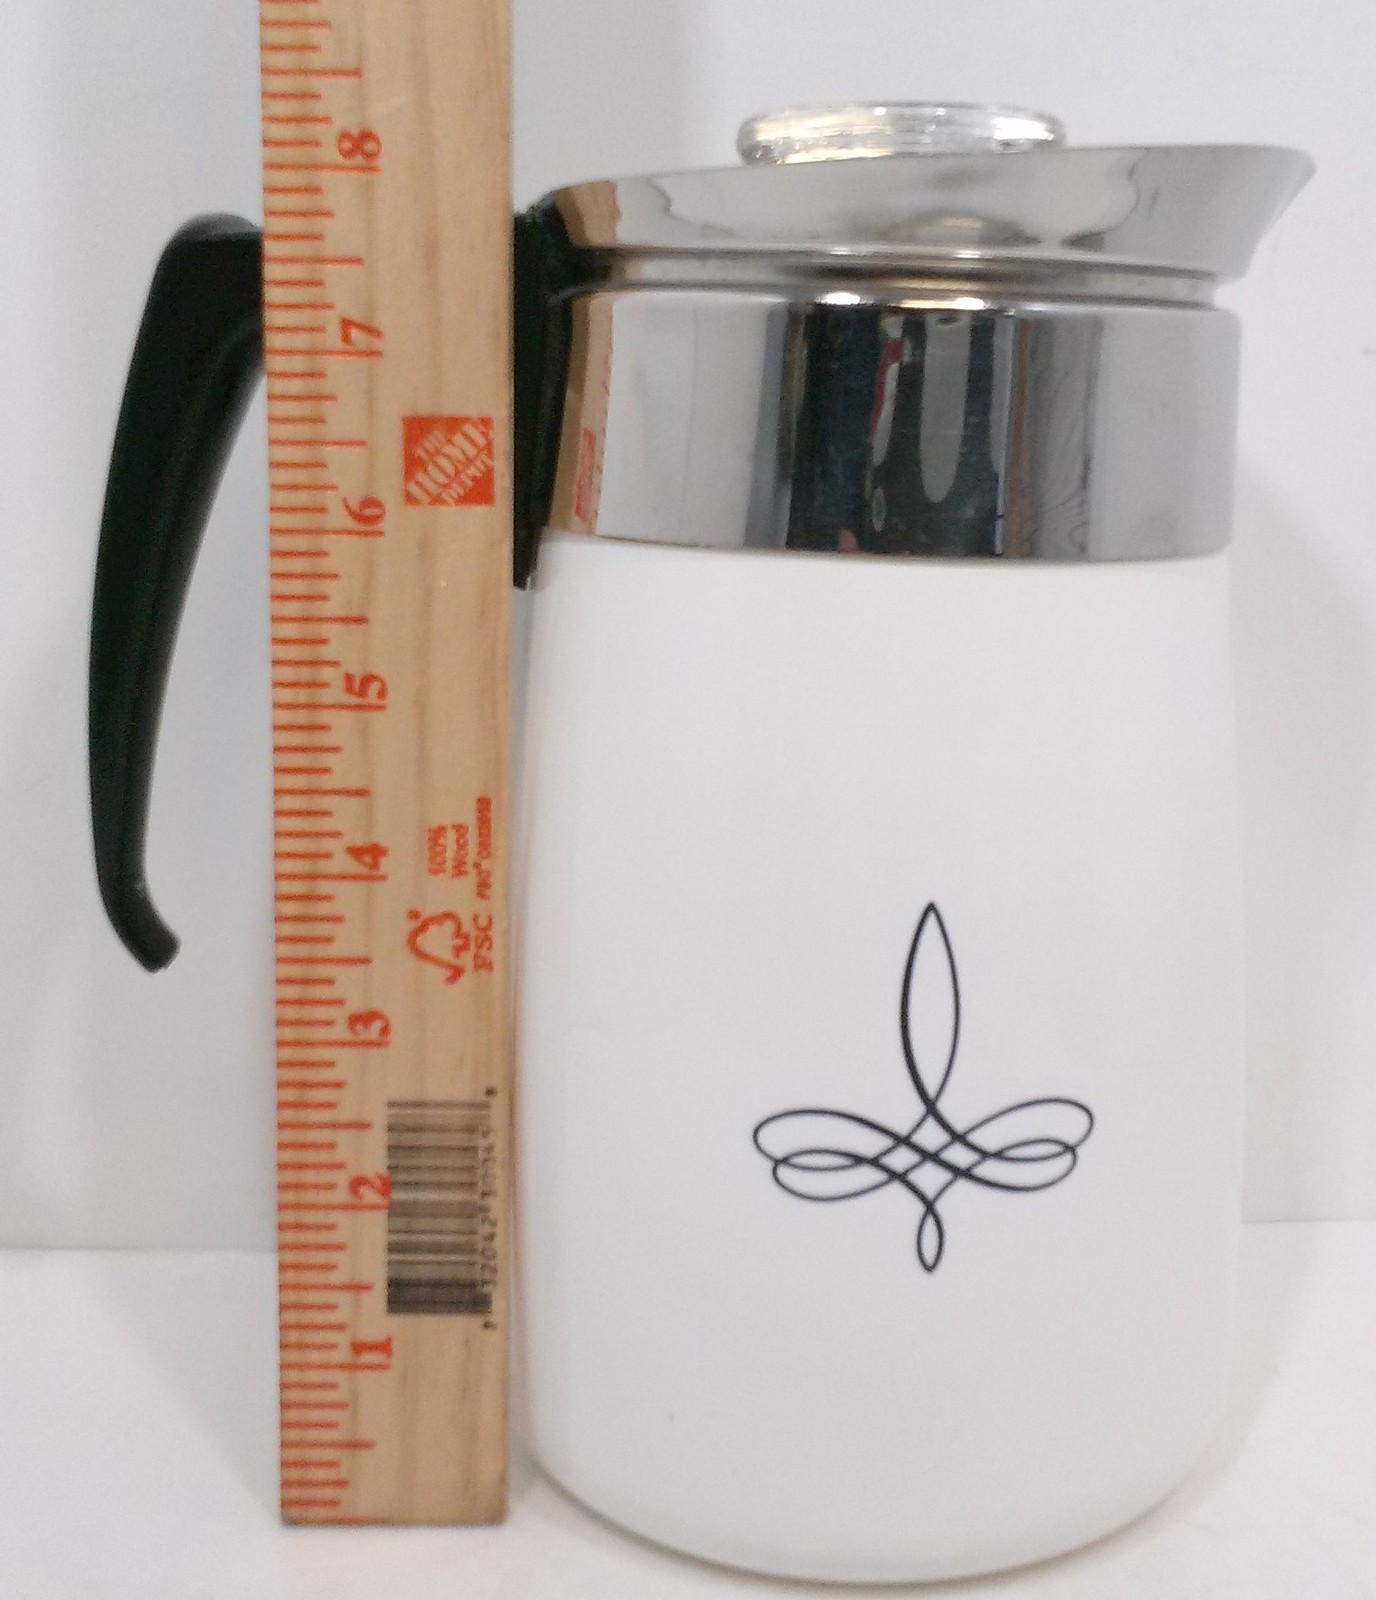 Corningware, Kitchen, Corning Ware Black Trefoil Cup Electric Percolator  Coffee Pot